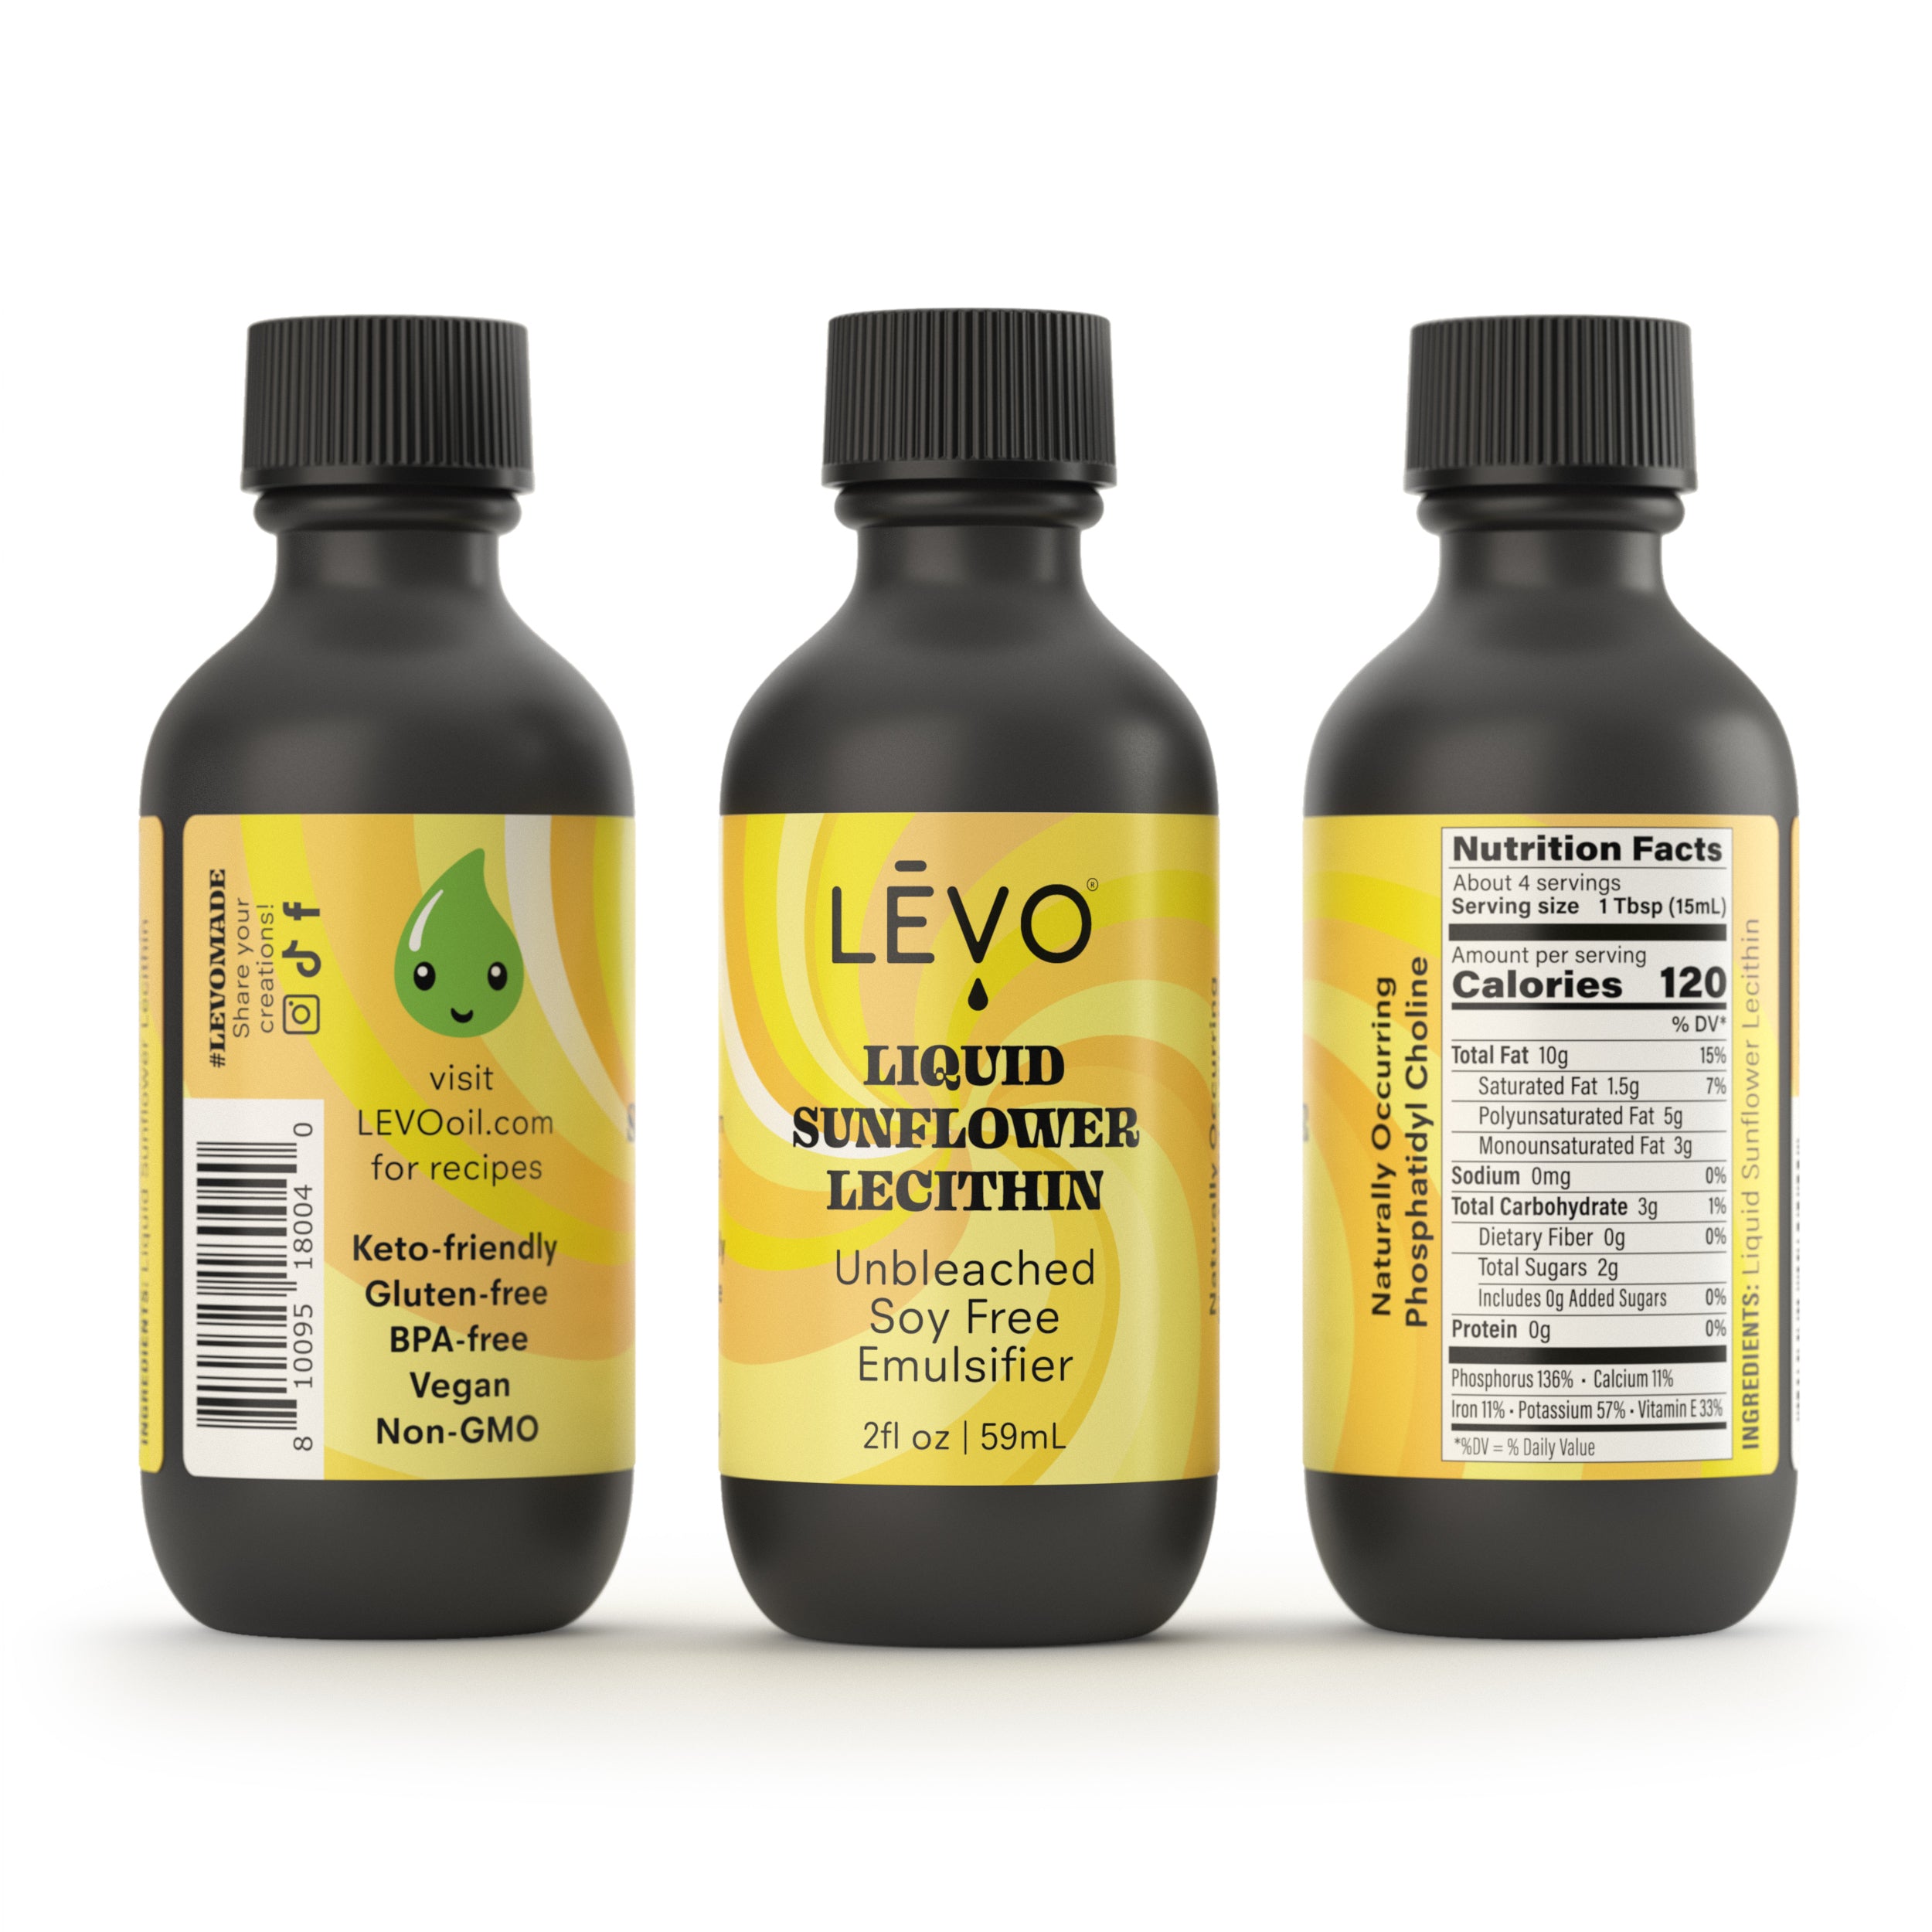 LEVO liquid sunflower lecithin 2pz